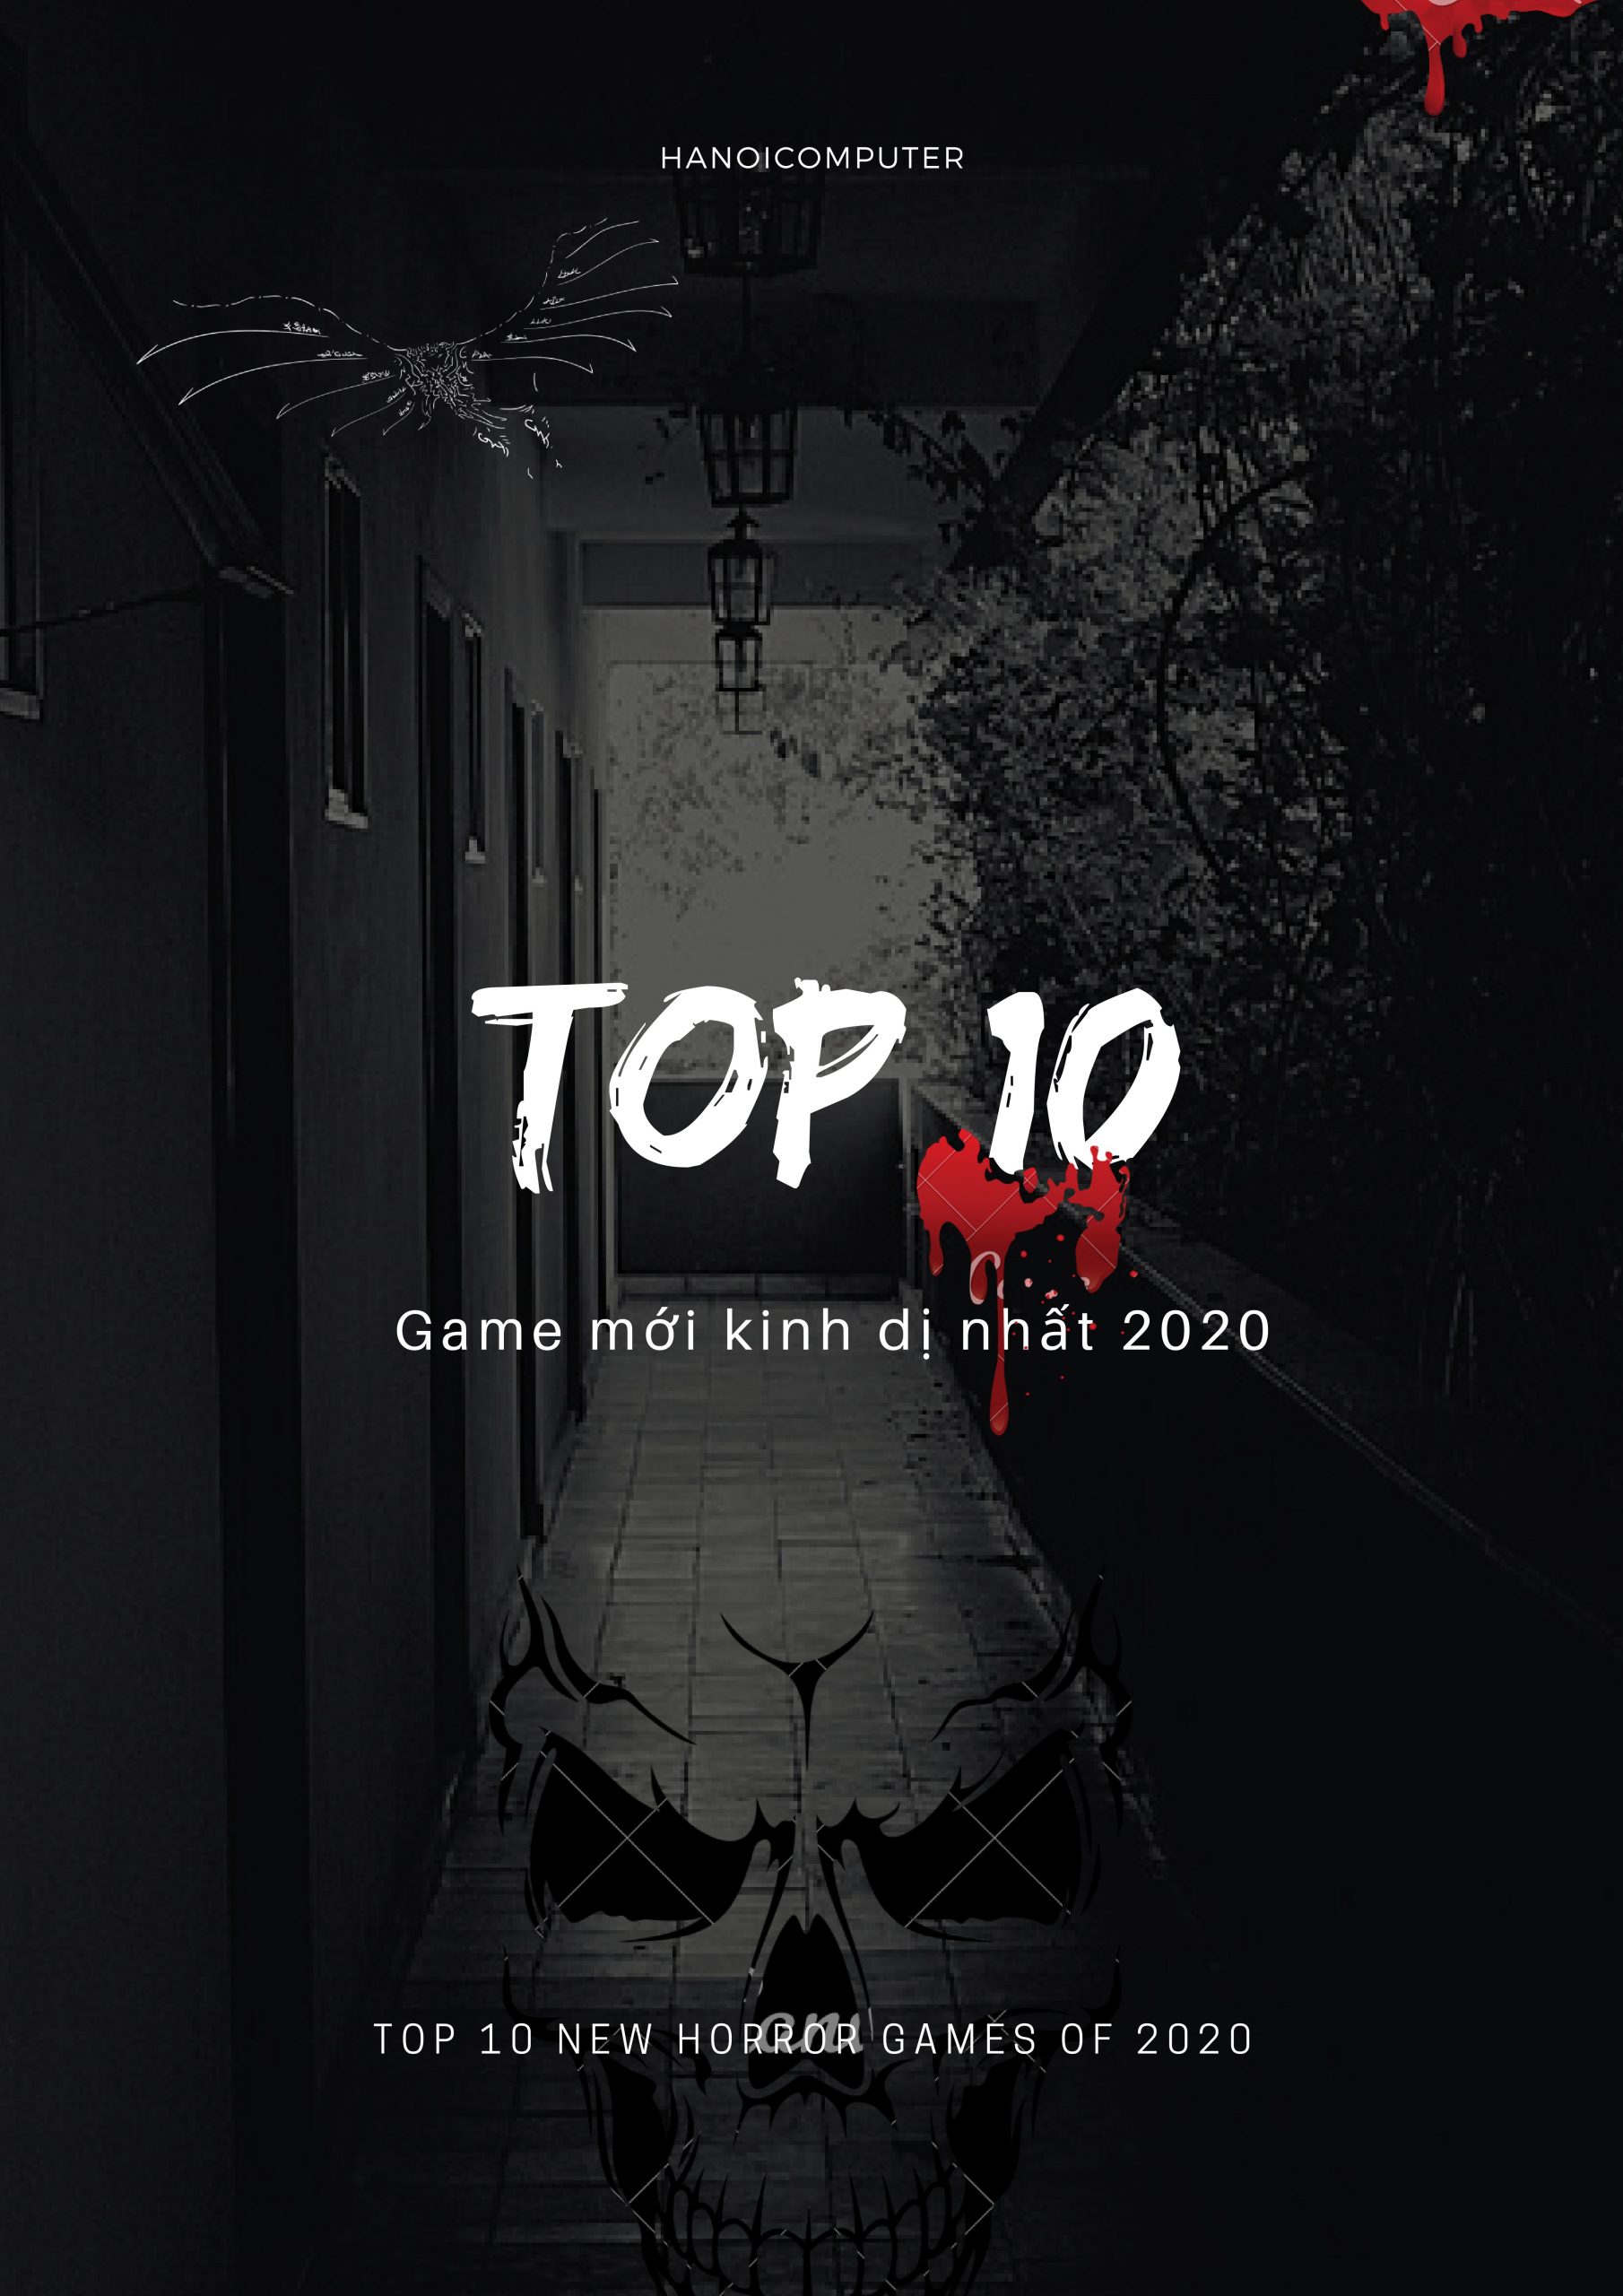 Top 10 game mới kinh dị nhất 2020